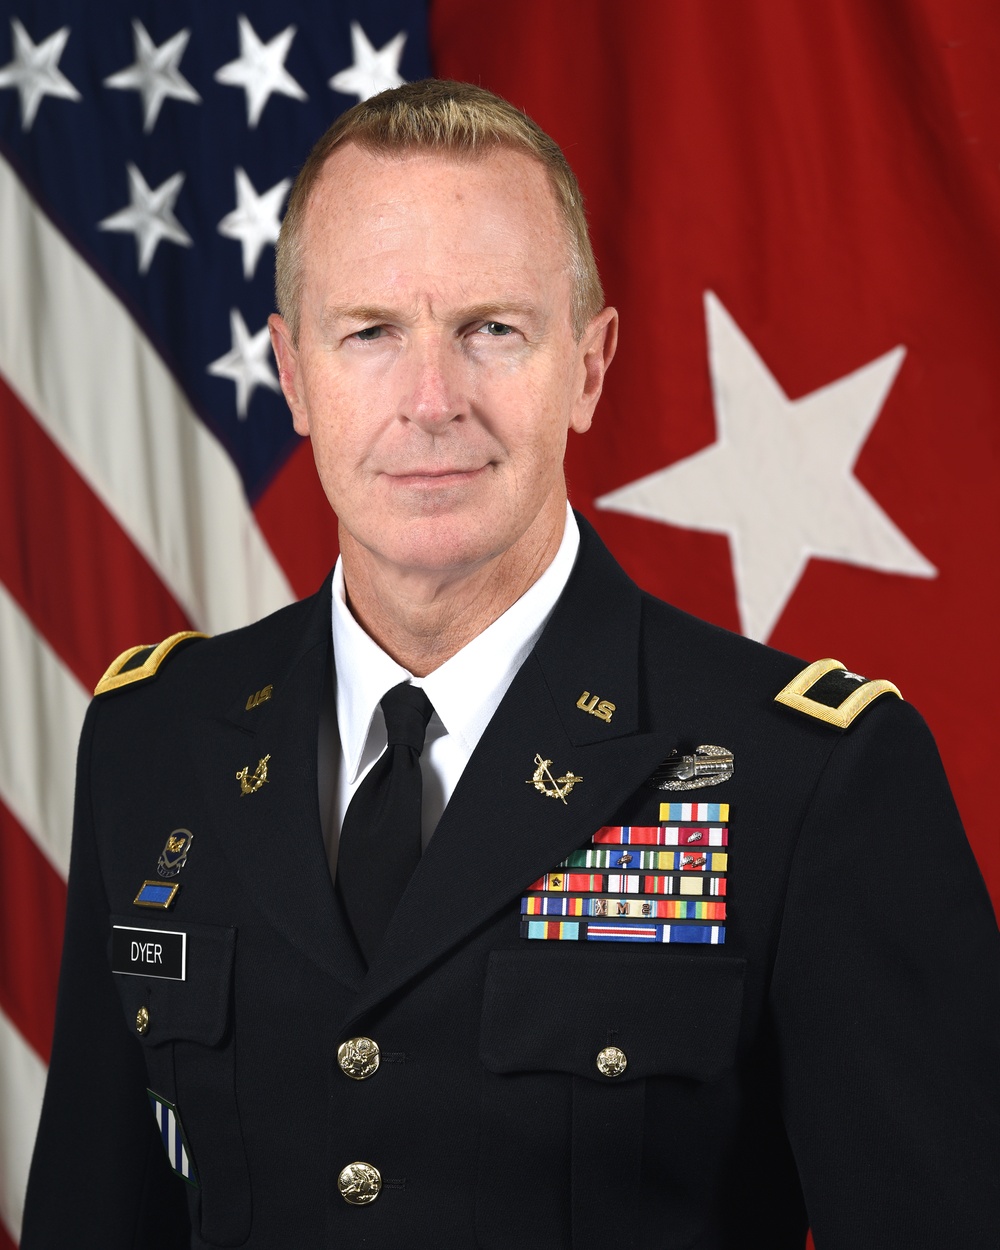 U.S. Army Brig. Gen. William Dyer